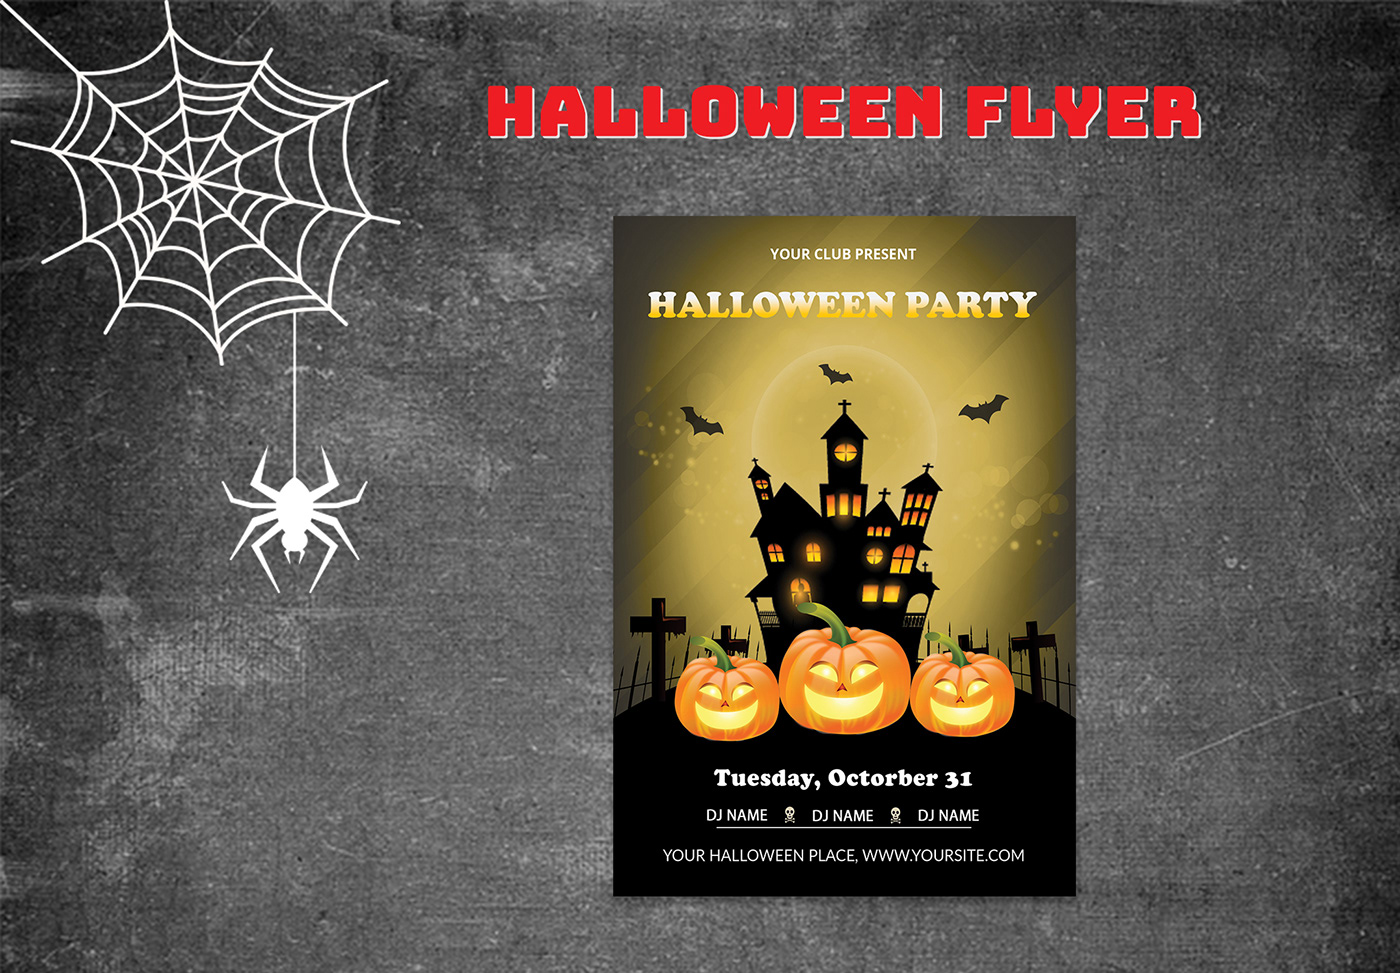 HALLOWEEN PARTY FLYER Halloween party flyer Invitation club photoshop ms word poster night